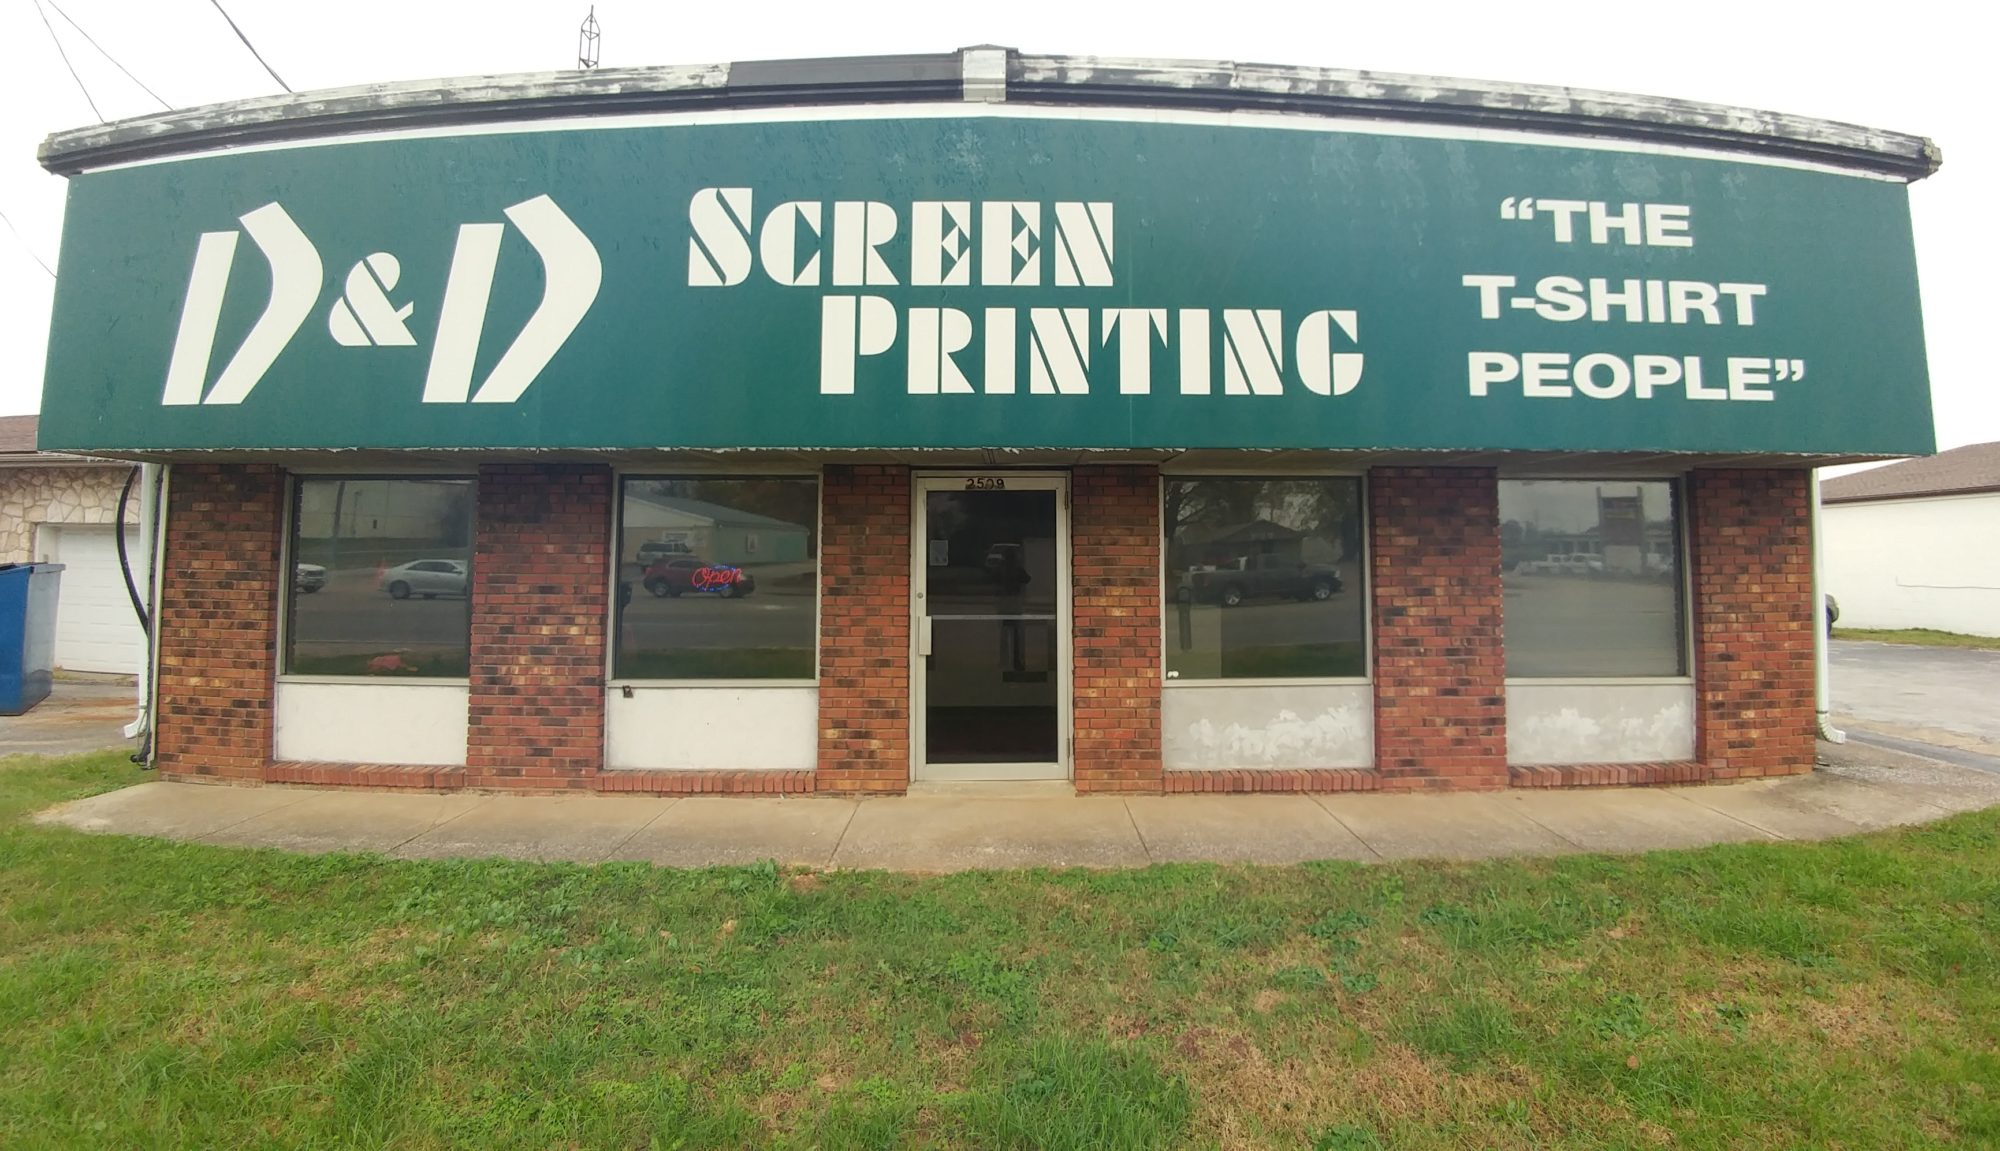 D&D Screen Printing